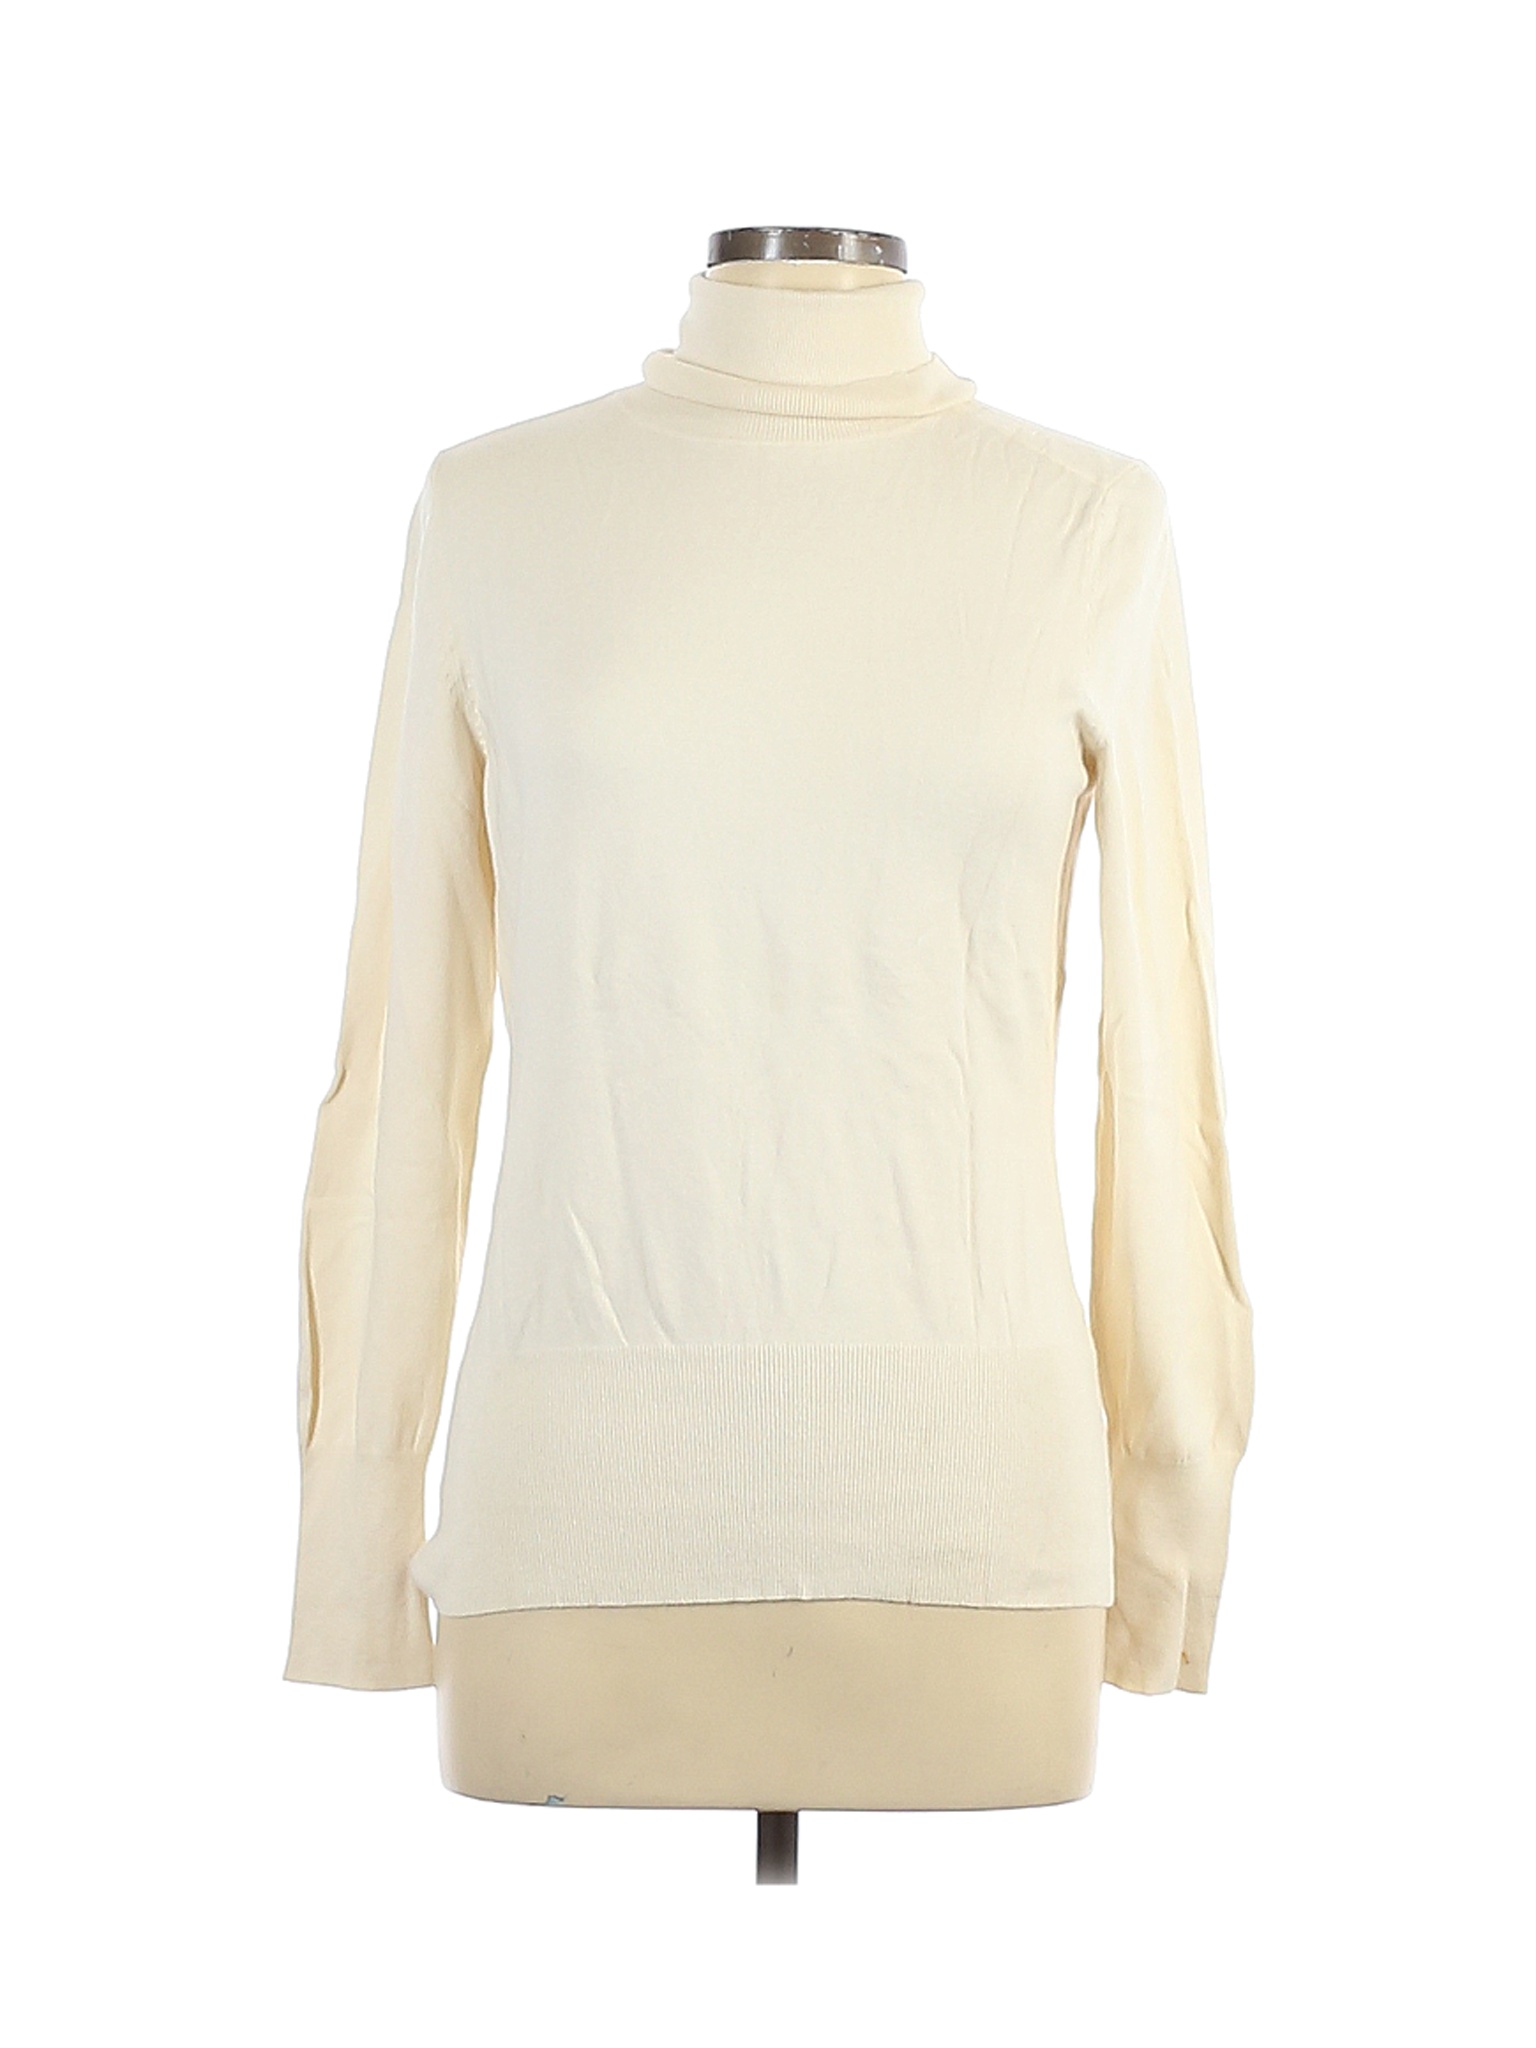 Banana Republic Women Ivory Turtleneck Sweater L | eBay